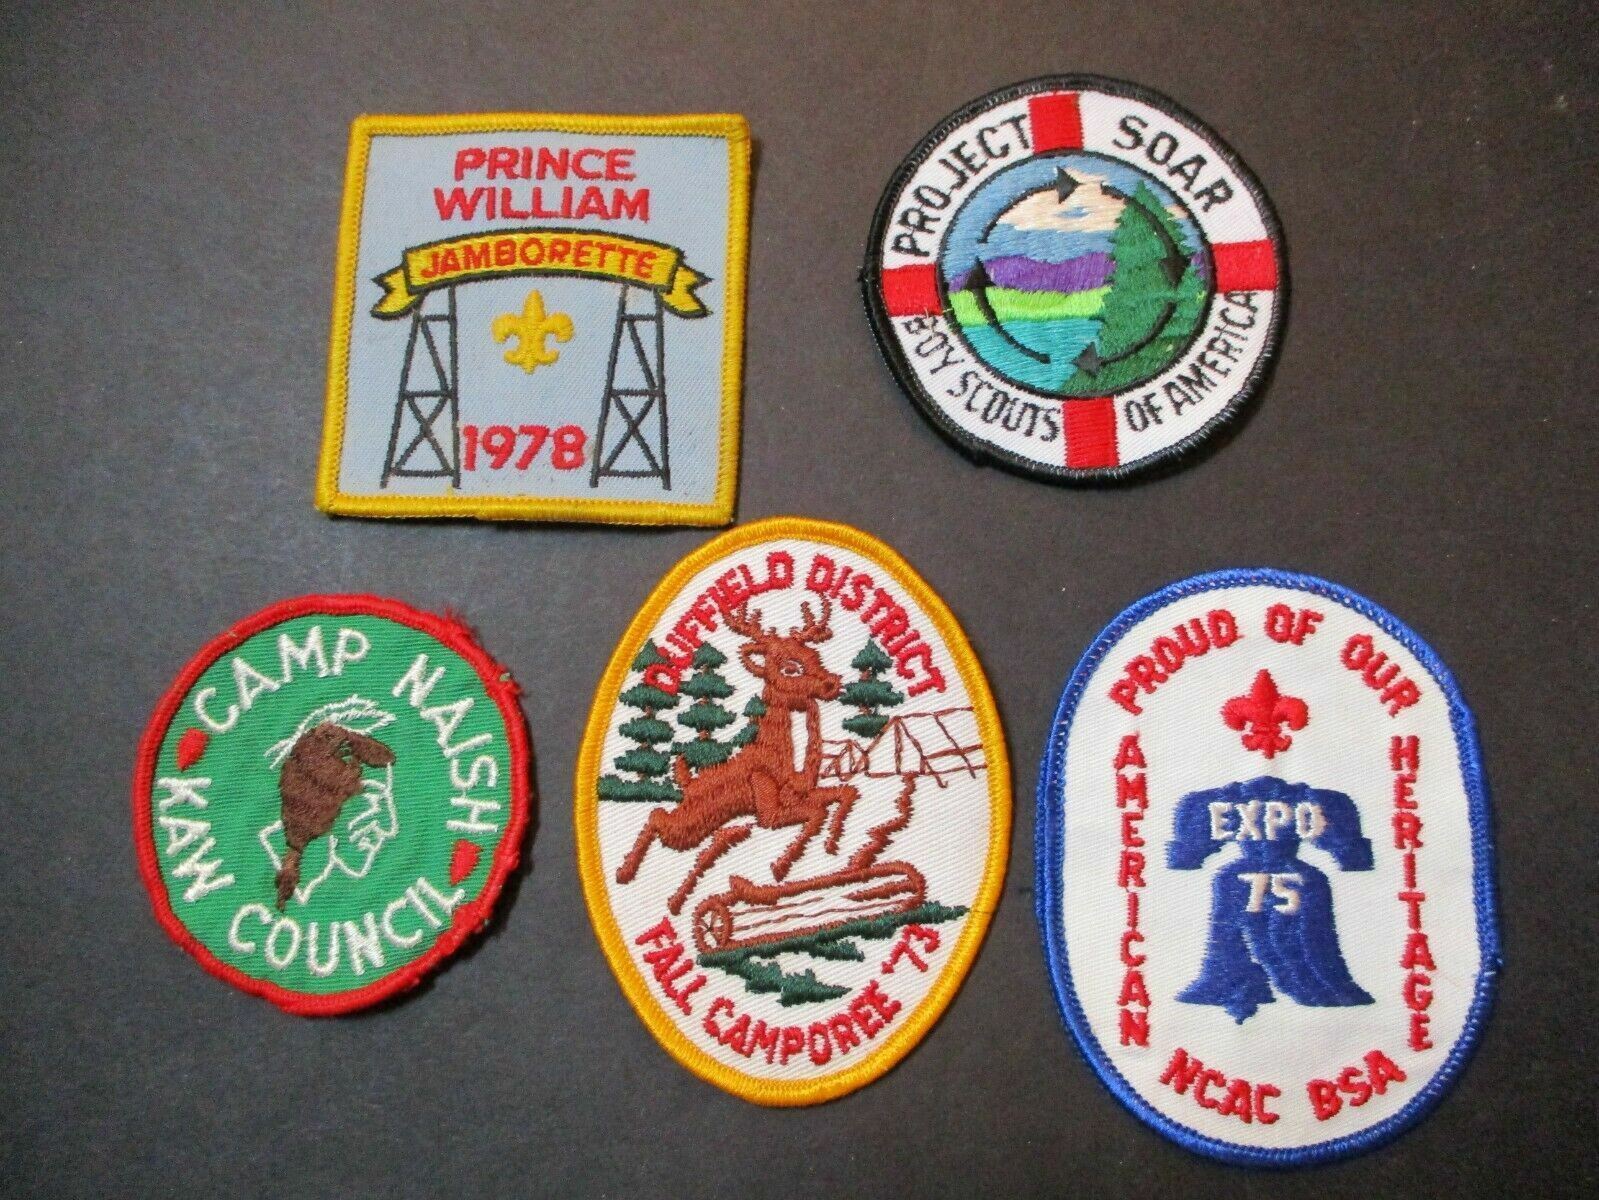 Lot of 5 boy scout patches-Prince William 1978 Jamborette